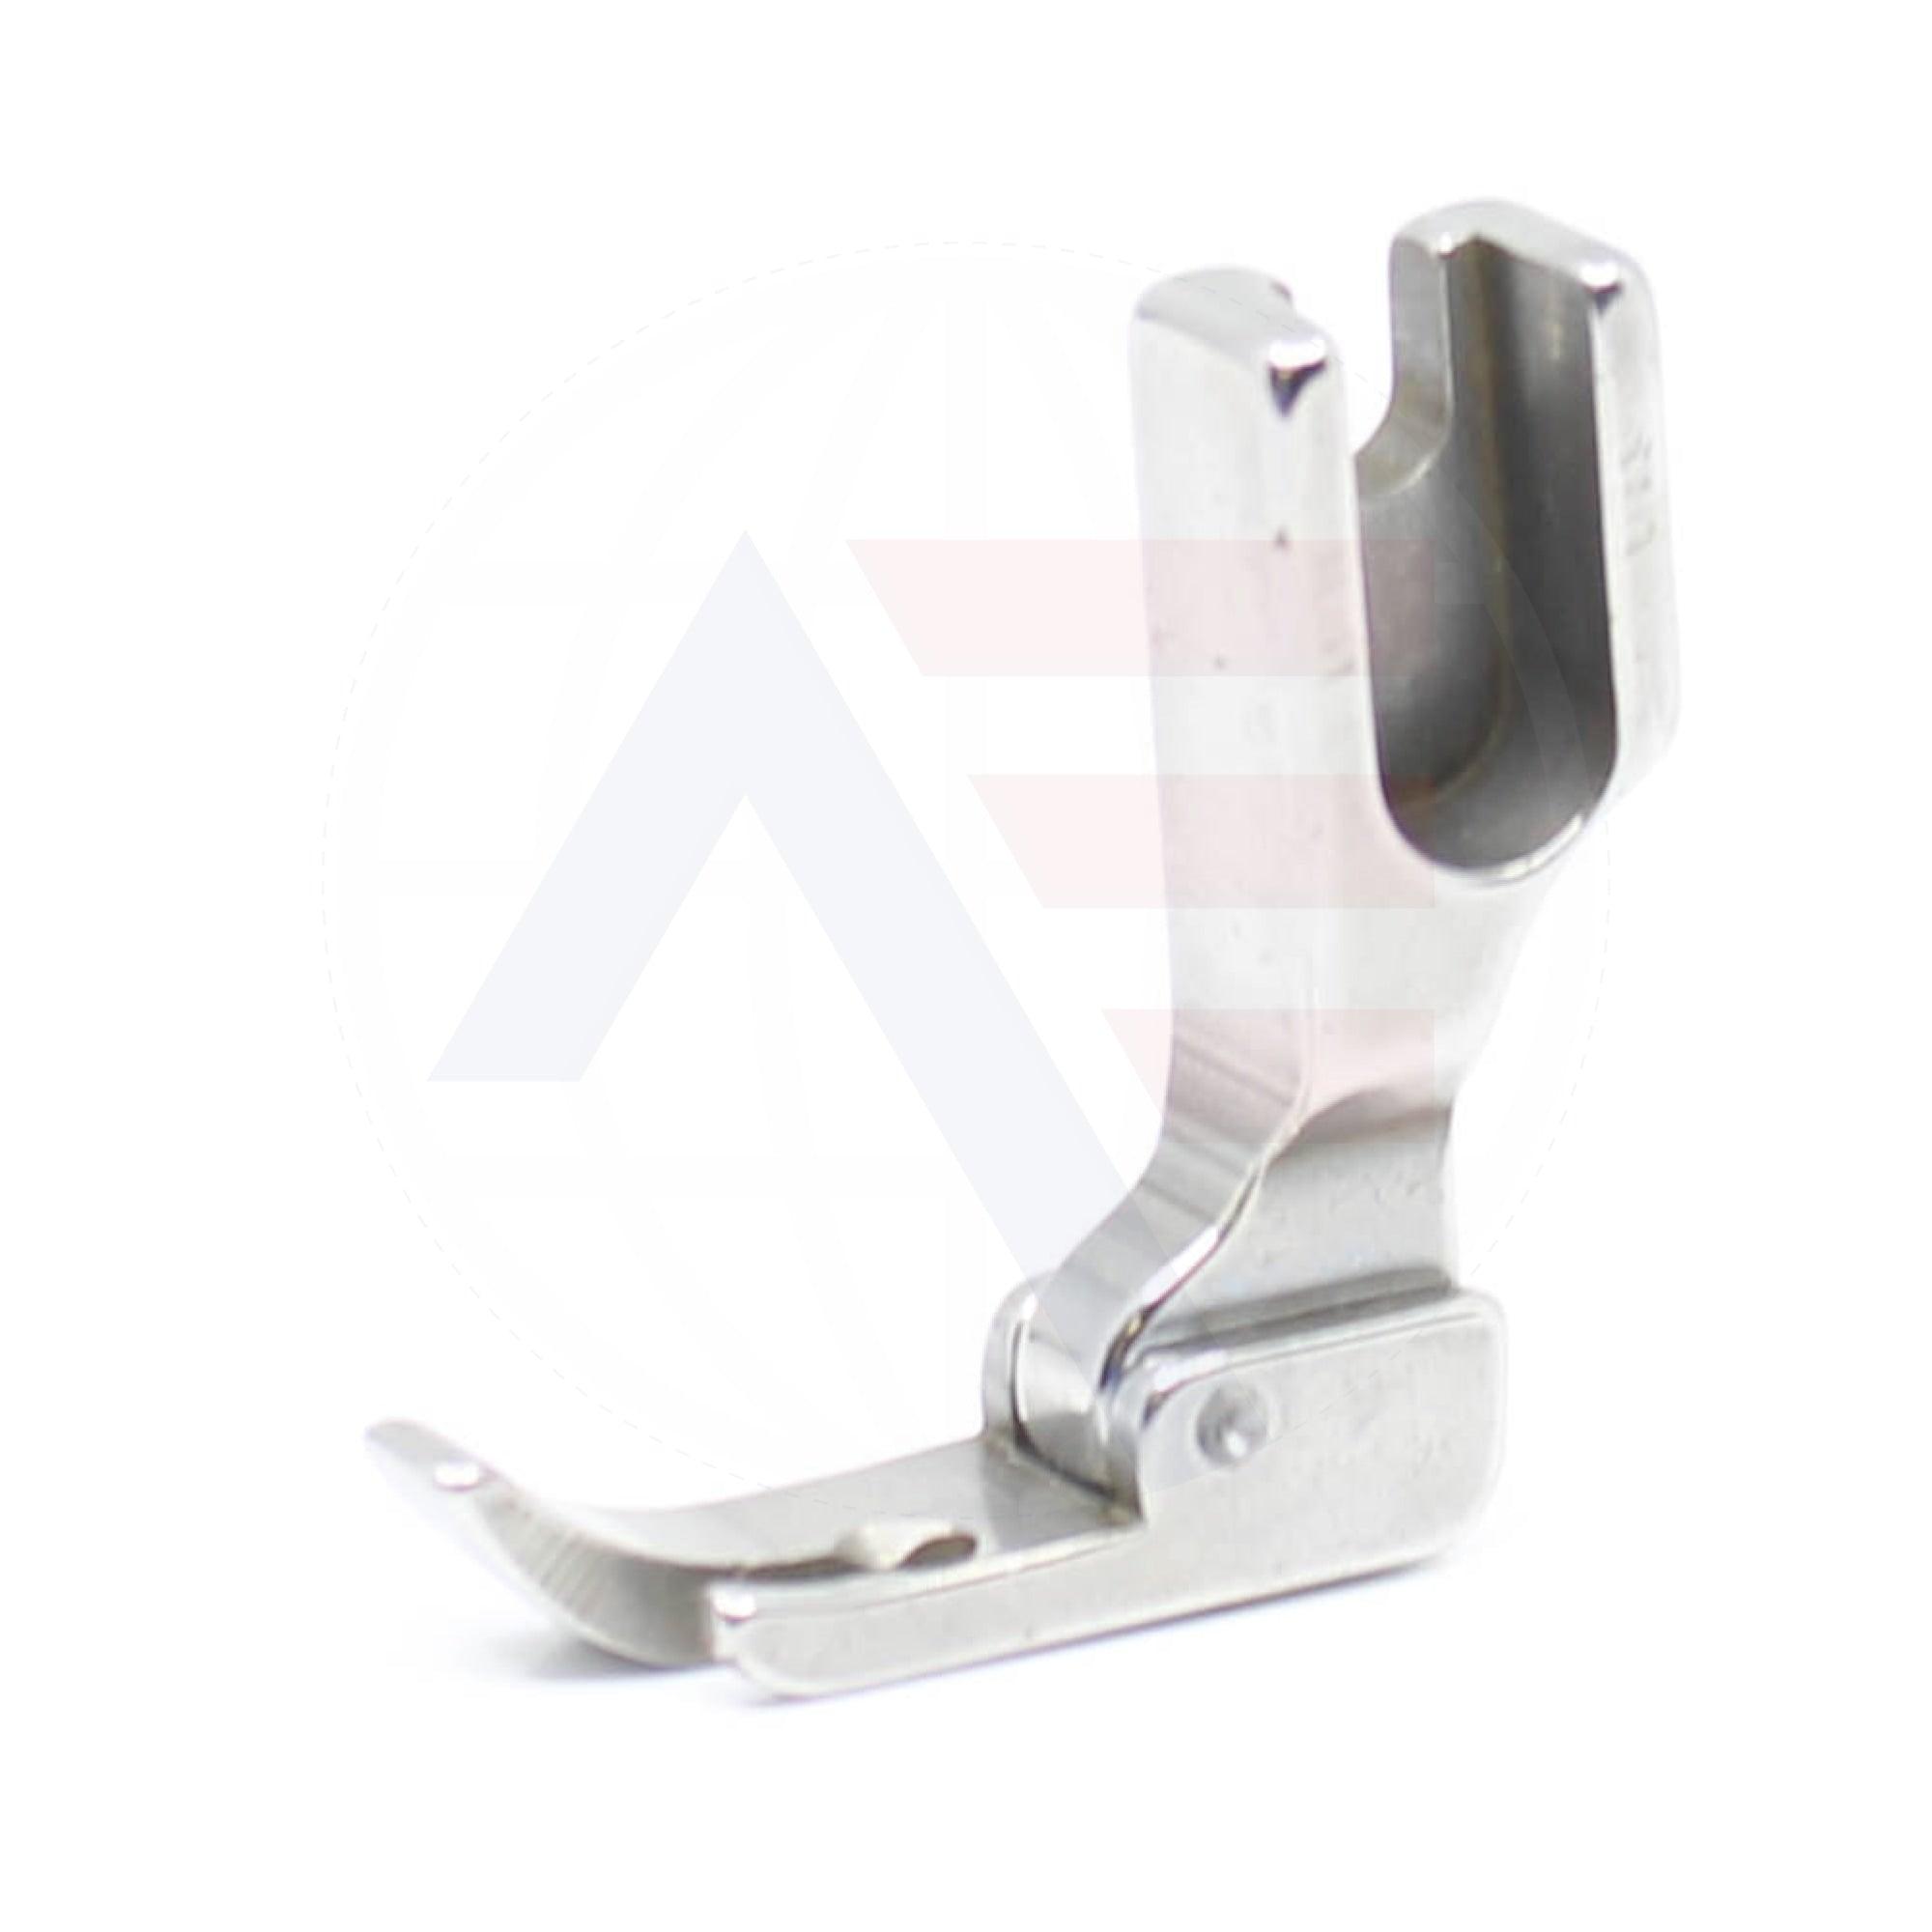 P361C Zipper Foot Sewing Machine Spare Parts